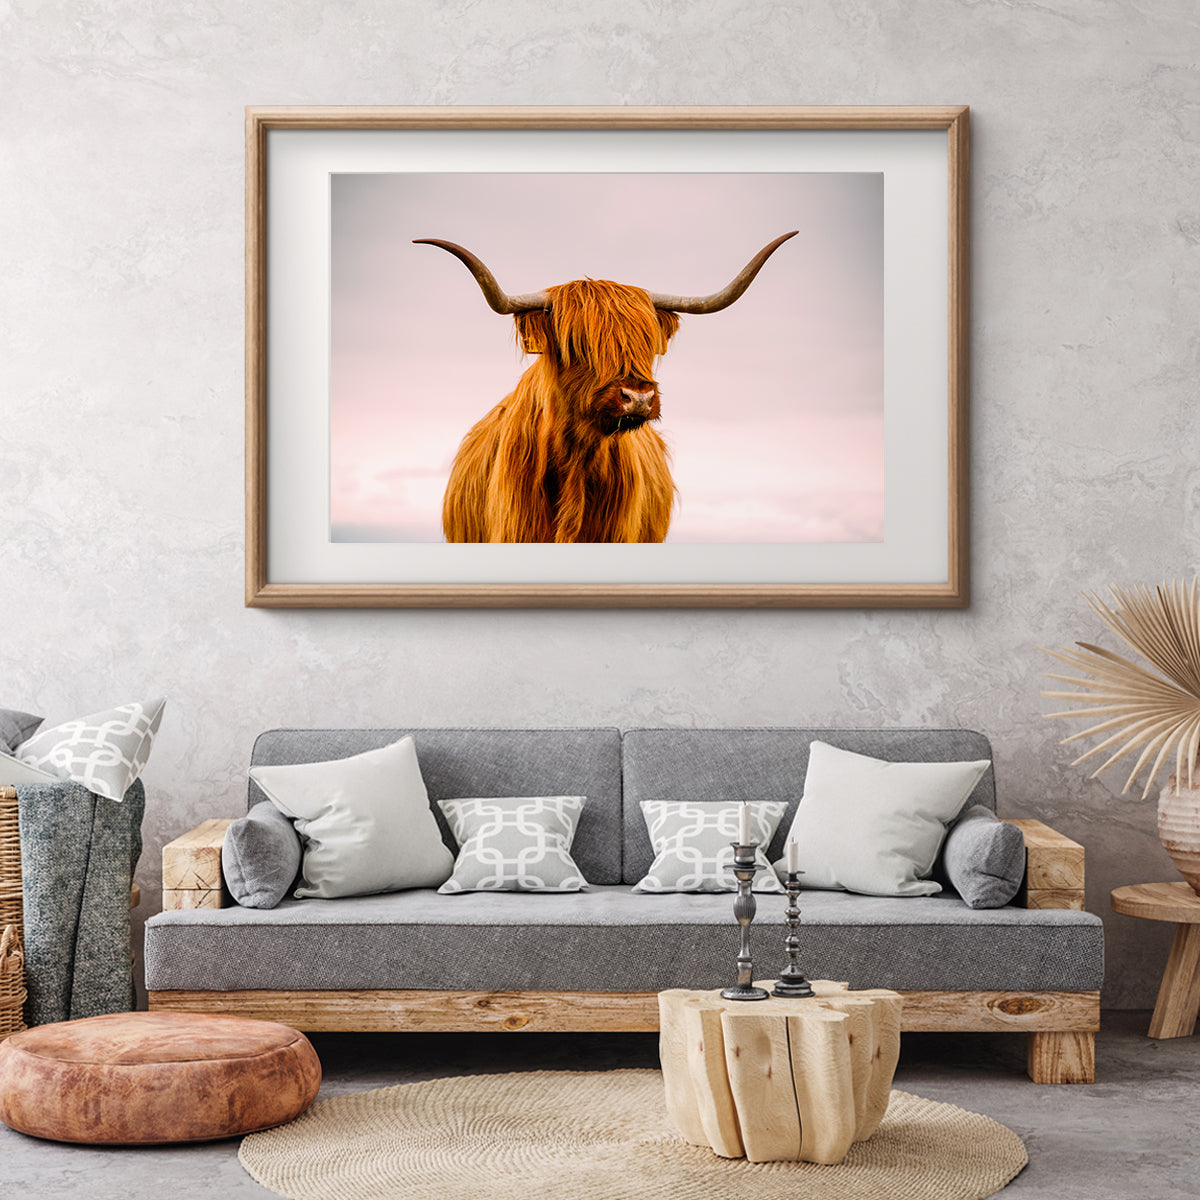 Highland Cow Wall Poster Art Print-Horizontal Posters NOT FRAMED-CetArt-10″x8″ inches-CetArt